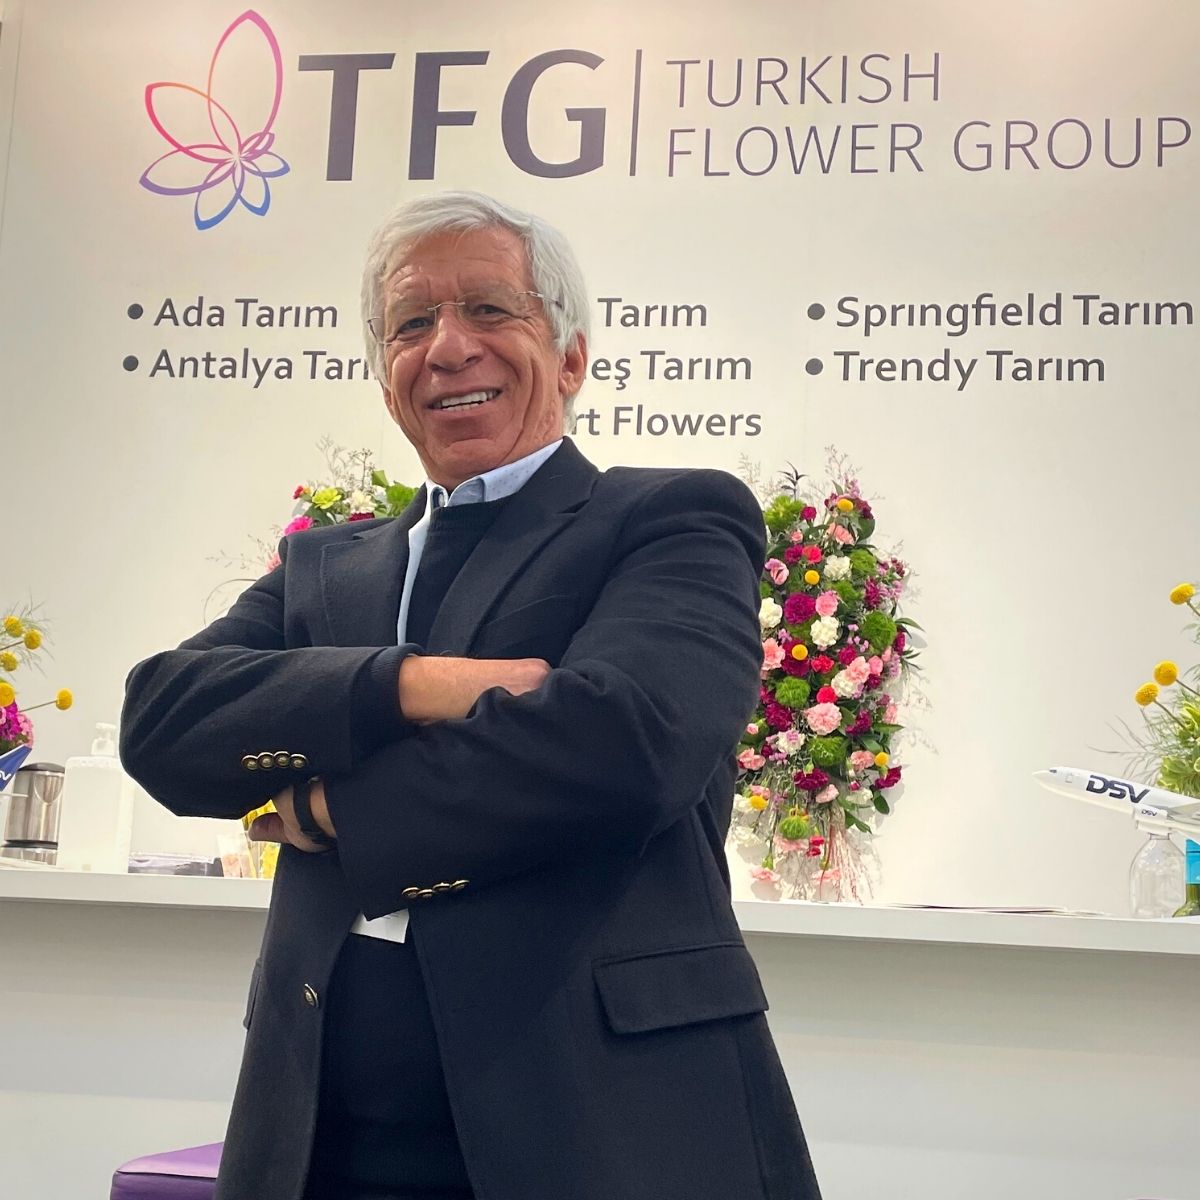 Turkish Flower Group - Lutfi gobus - on Thursd